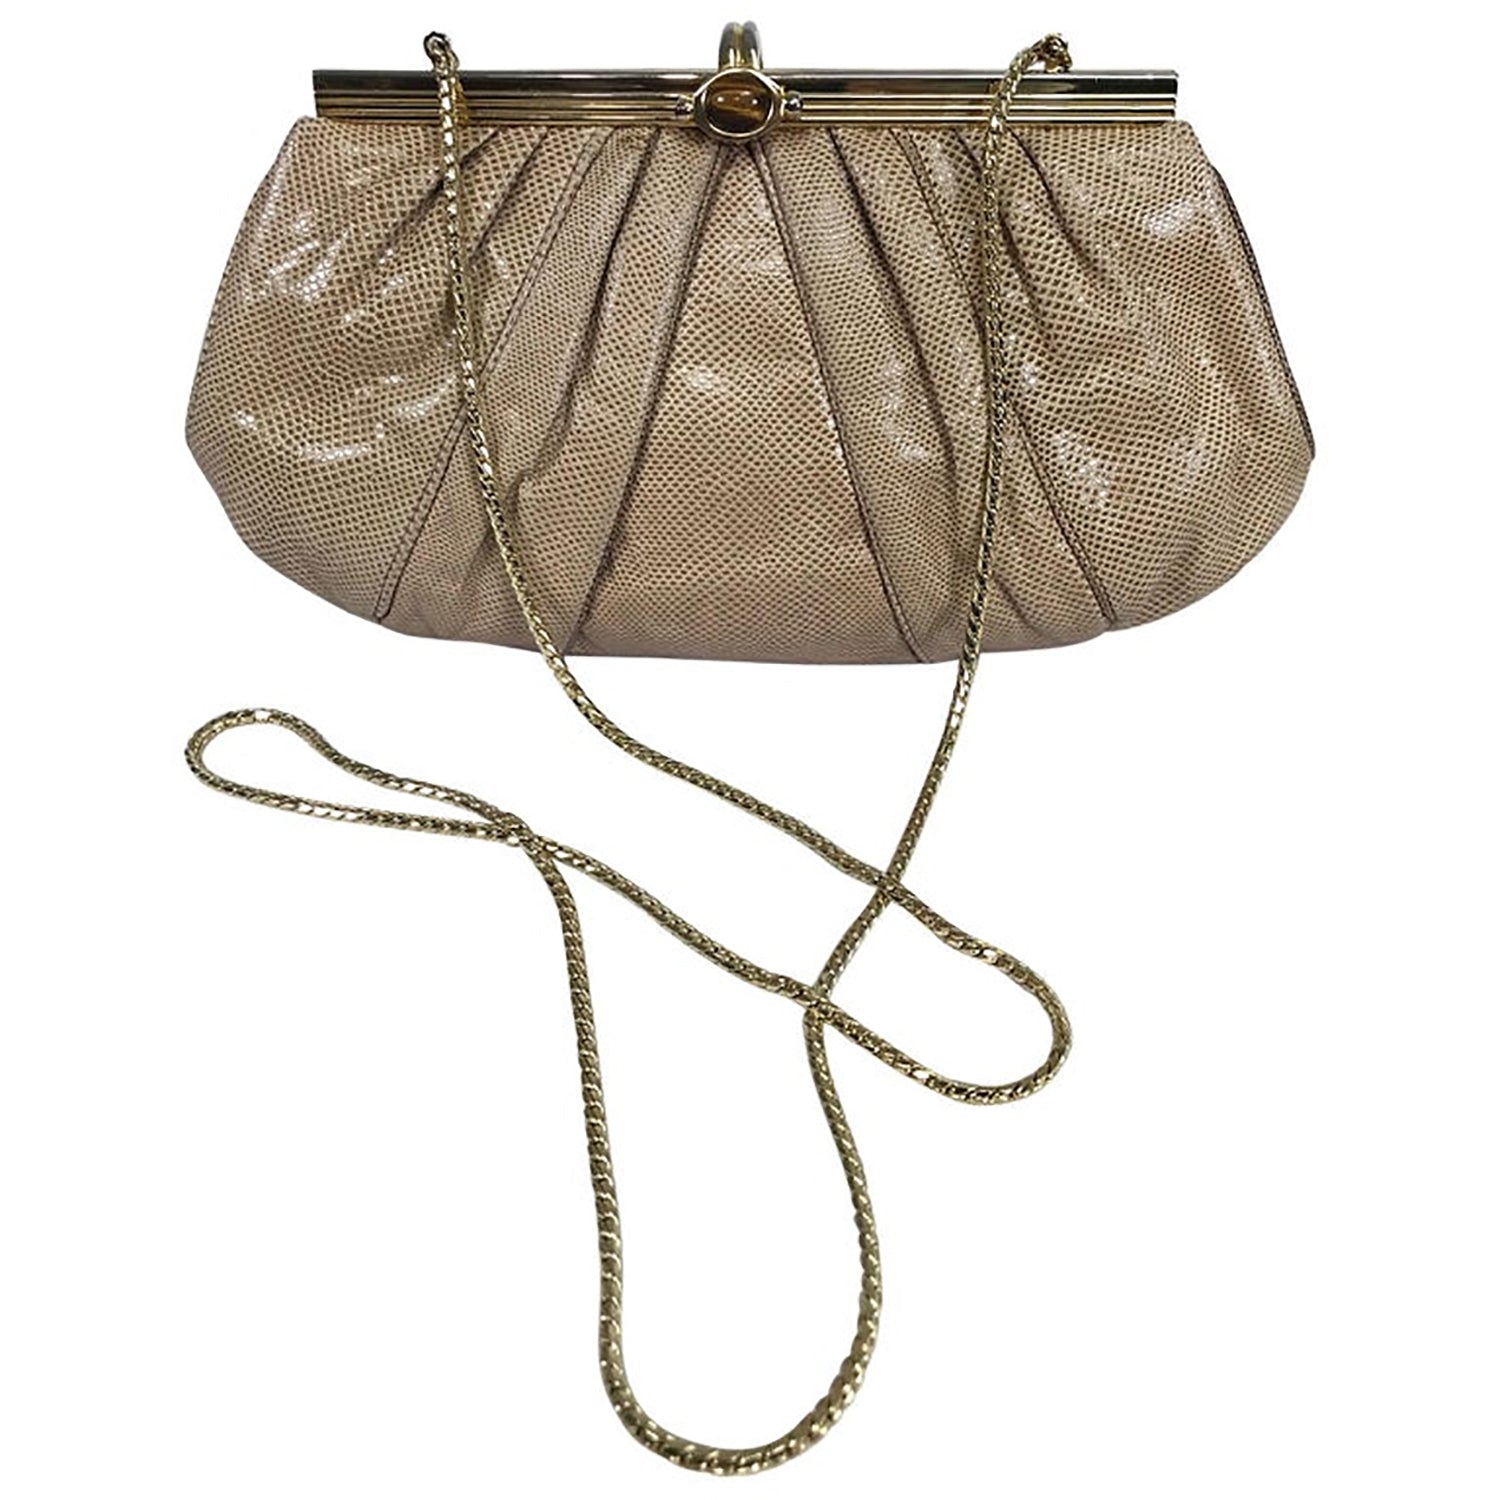 Judith Leiber Vintage Horn Lizard Leather Handbag Clutch Purse